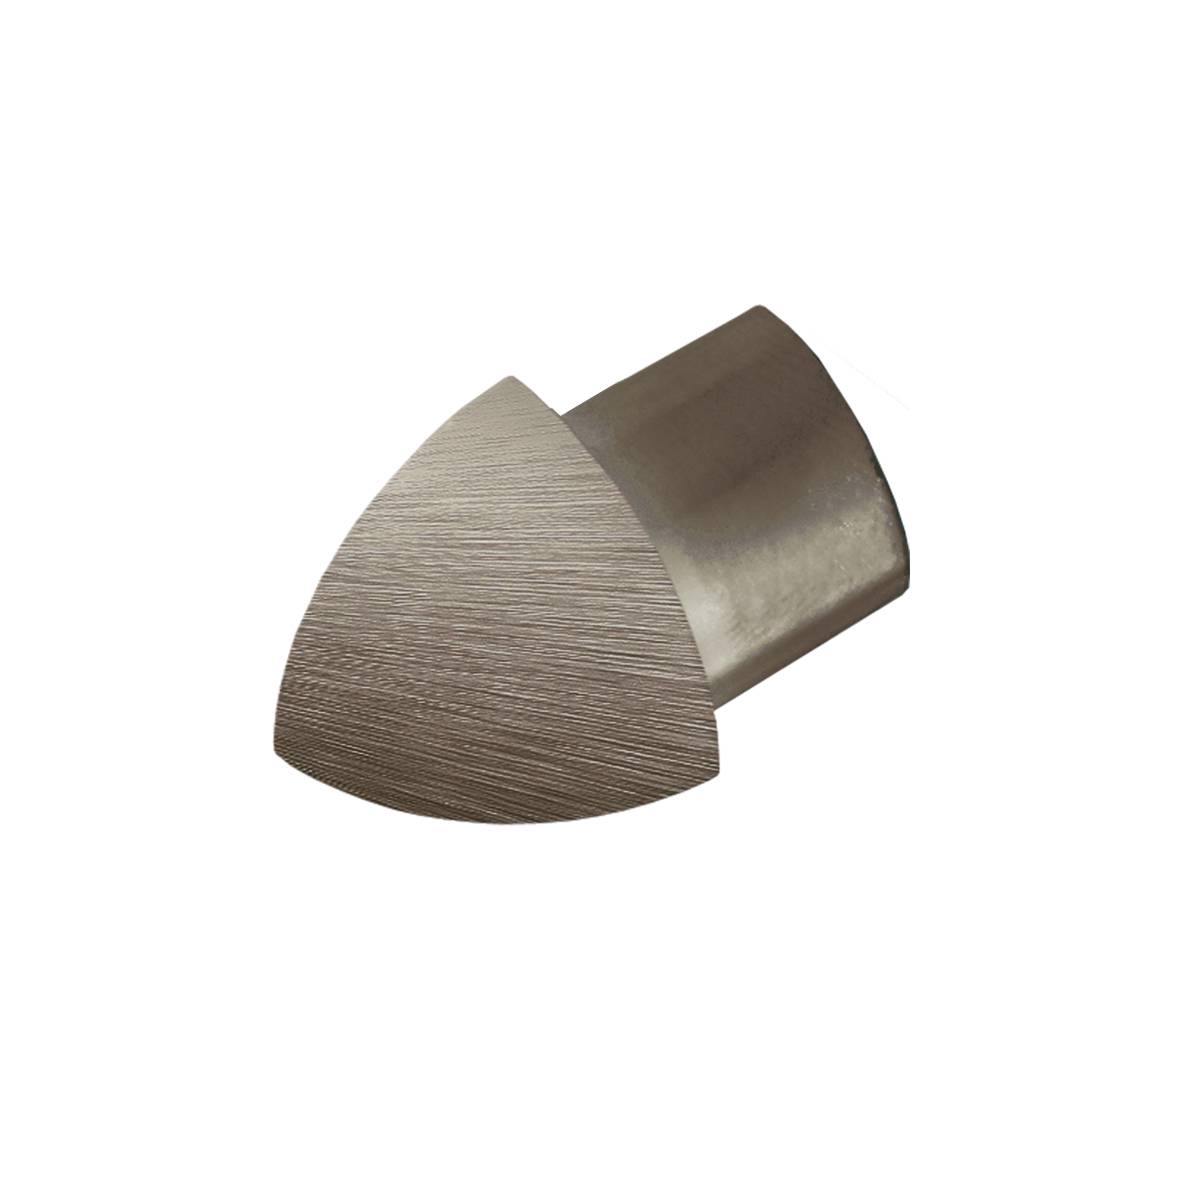 DURAL DURONDELL 3/8 in. Round Edge Metal External Corner Aluminum High-Gloss Anodized Brushed Nickel/Titanium